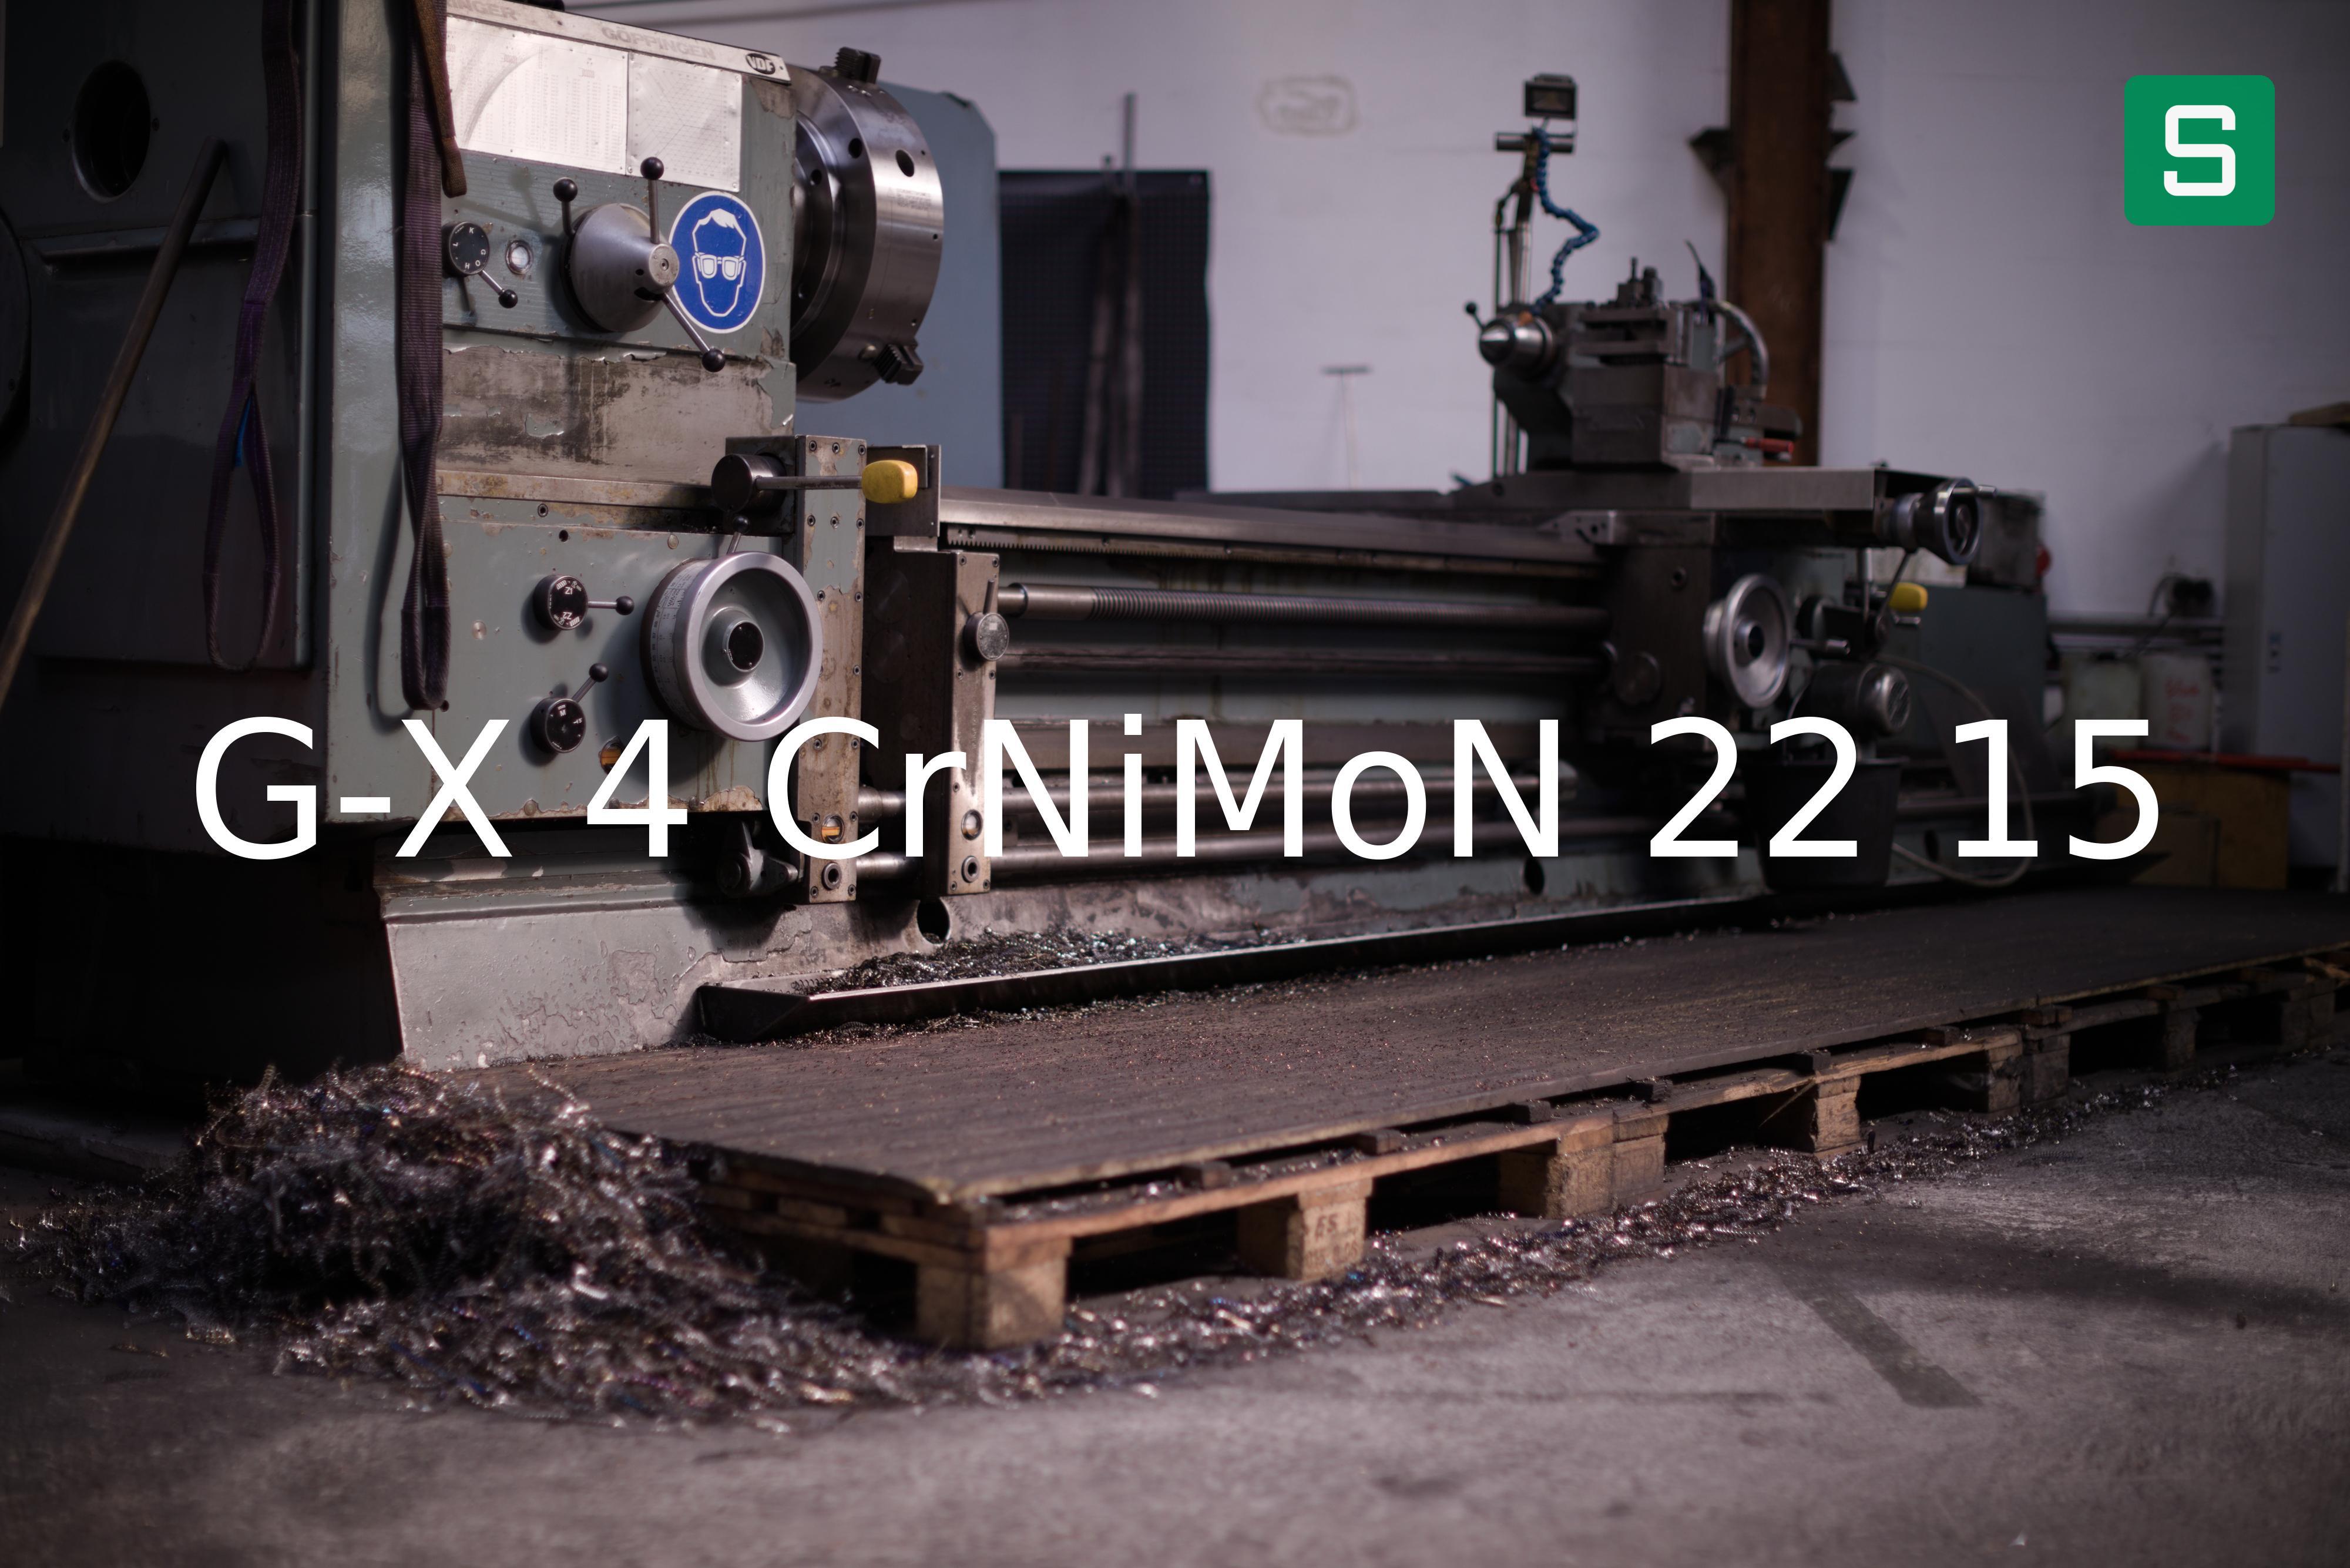 Steel Material: G-X 4 CrNiMoN 22 15